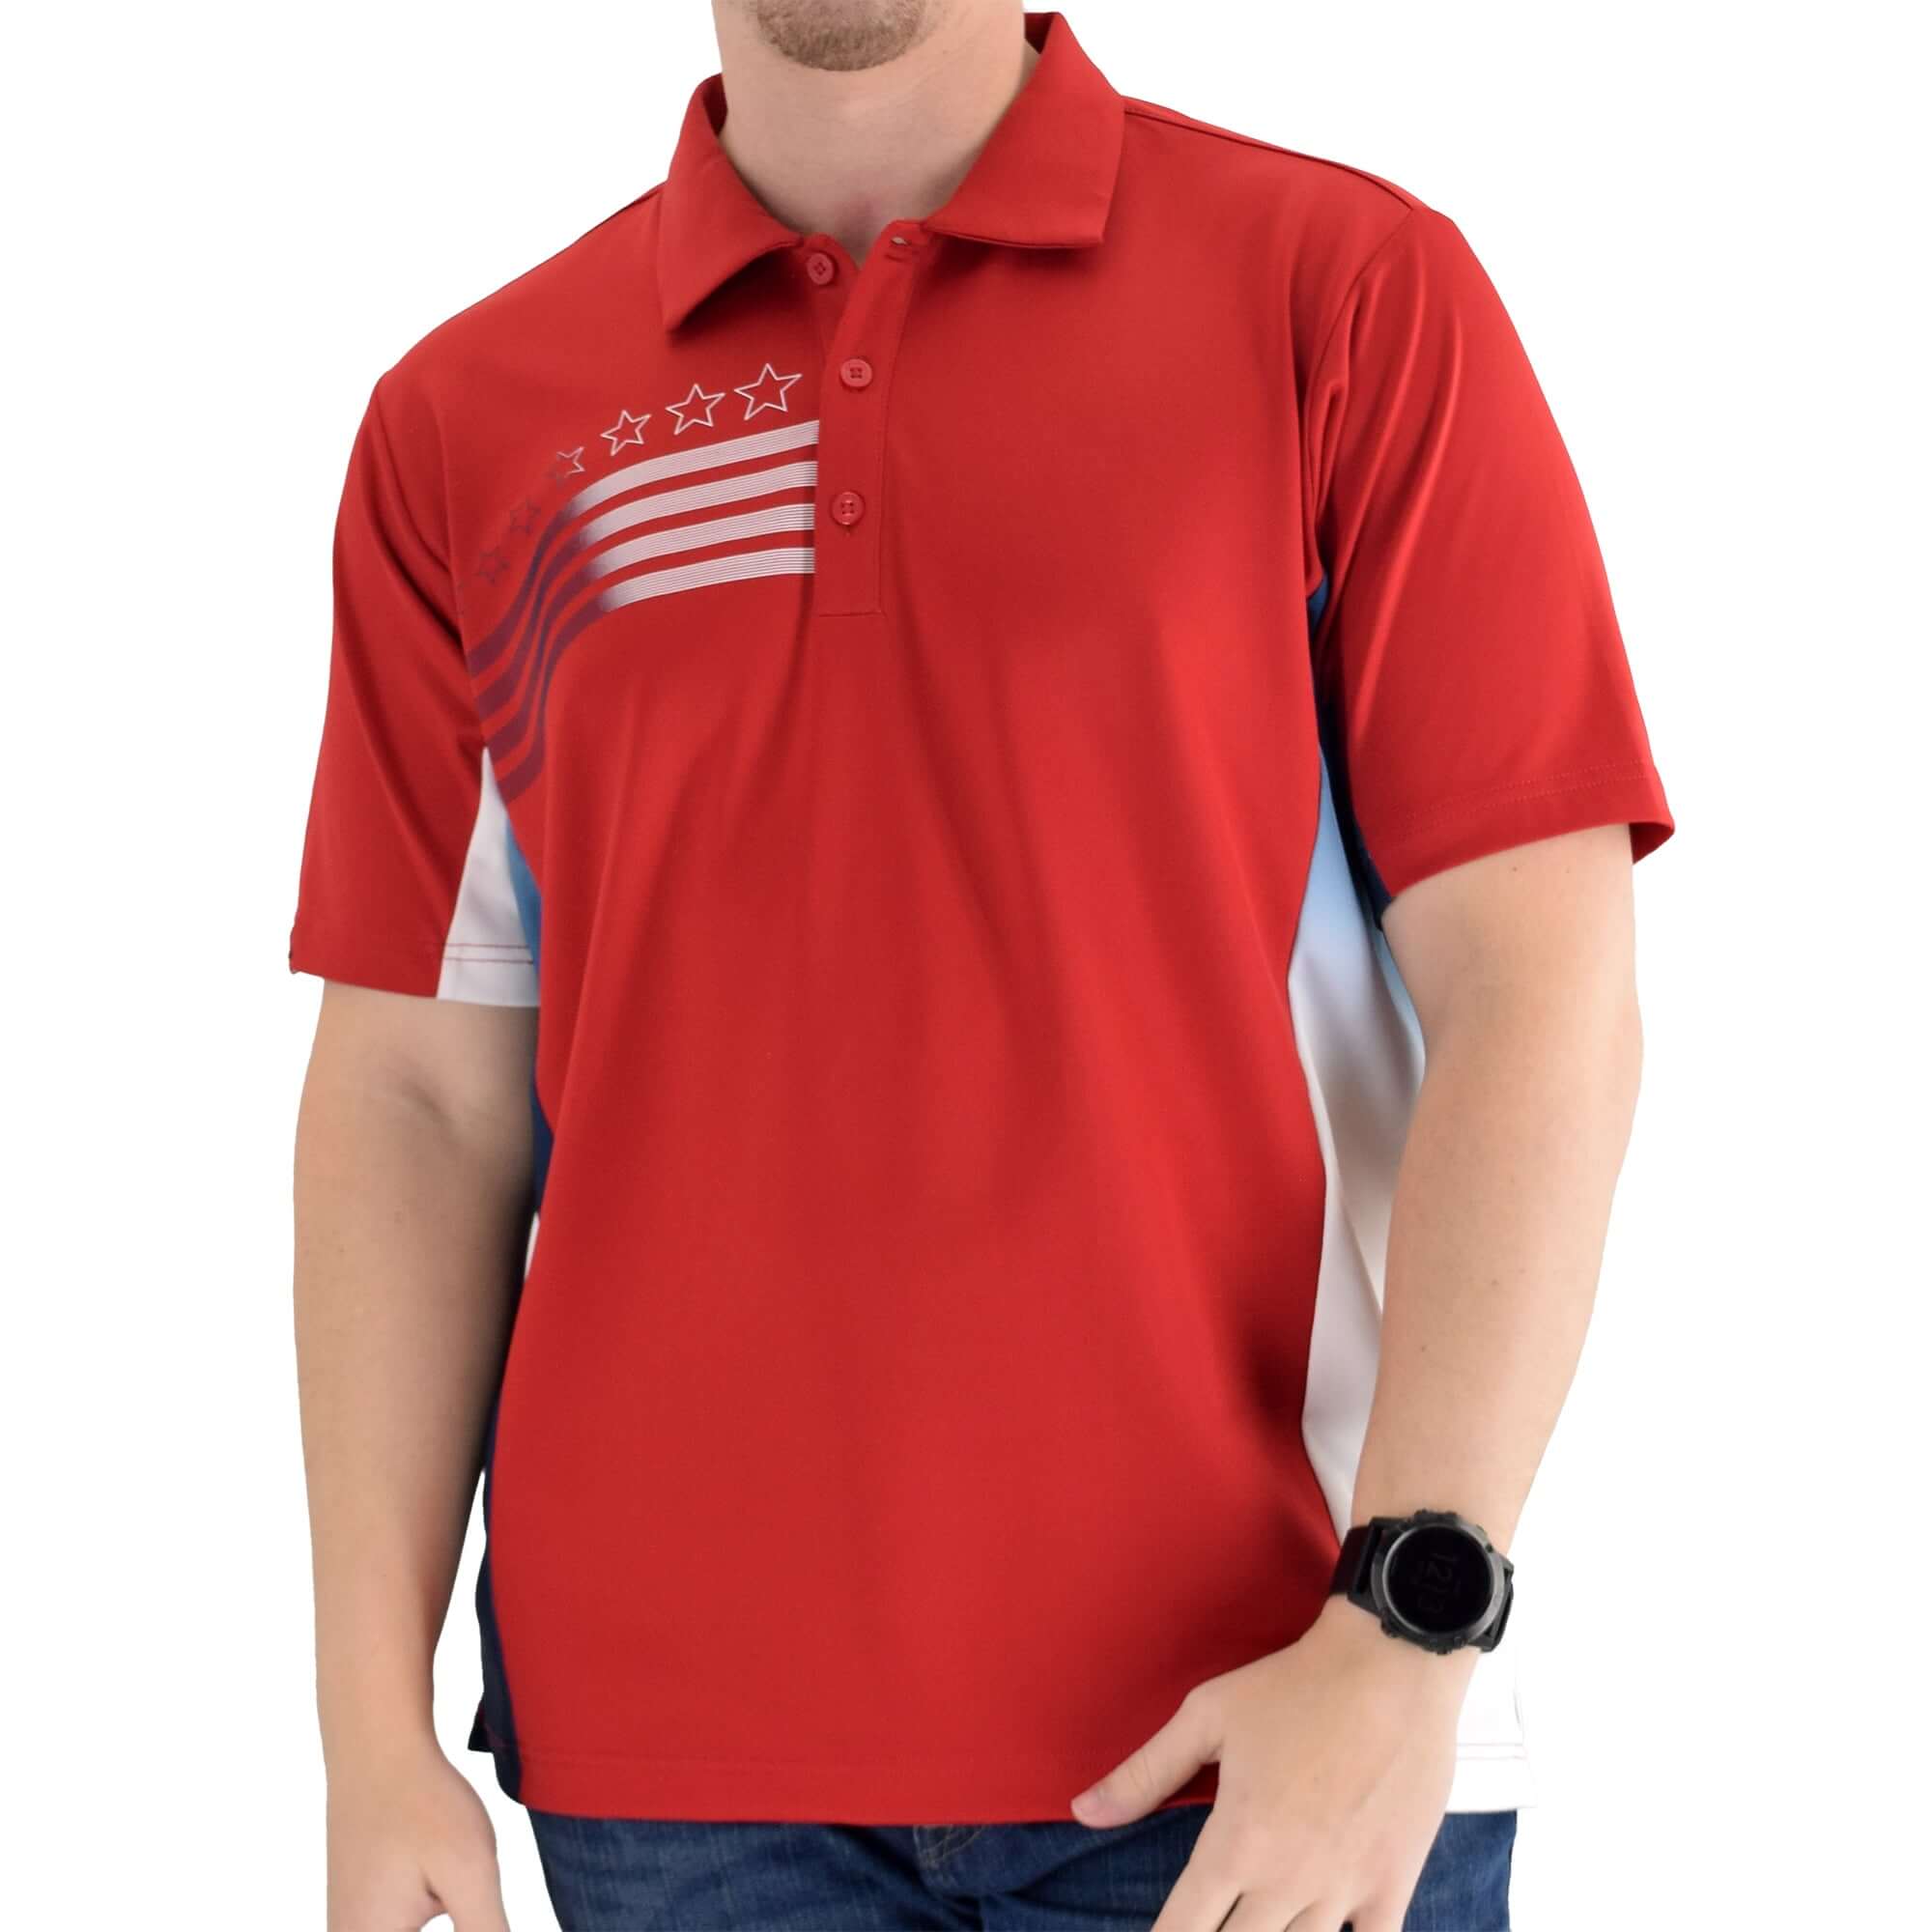 mens liberty classic polo shirt red - the flag shirt